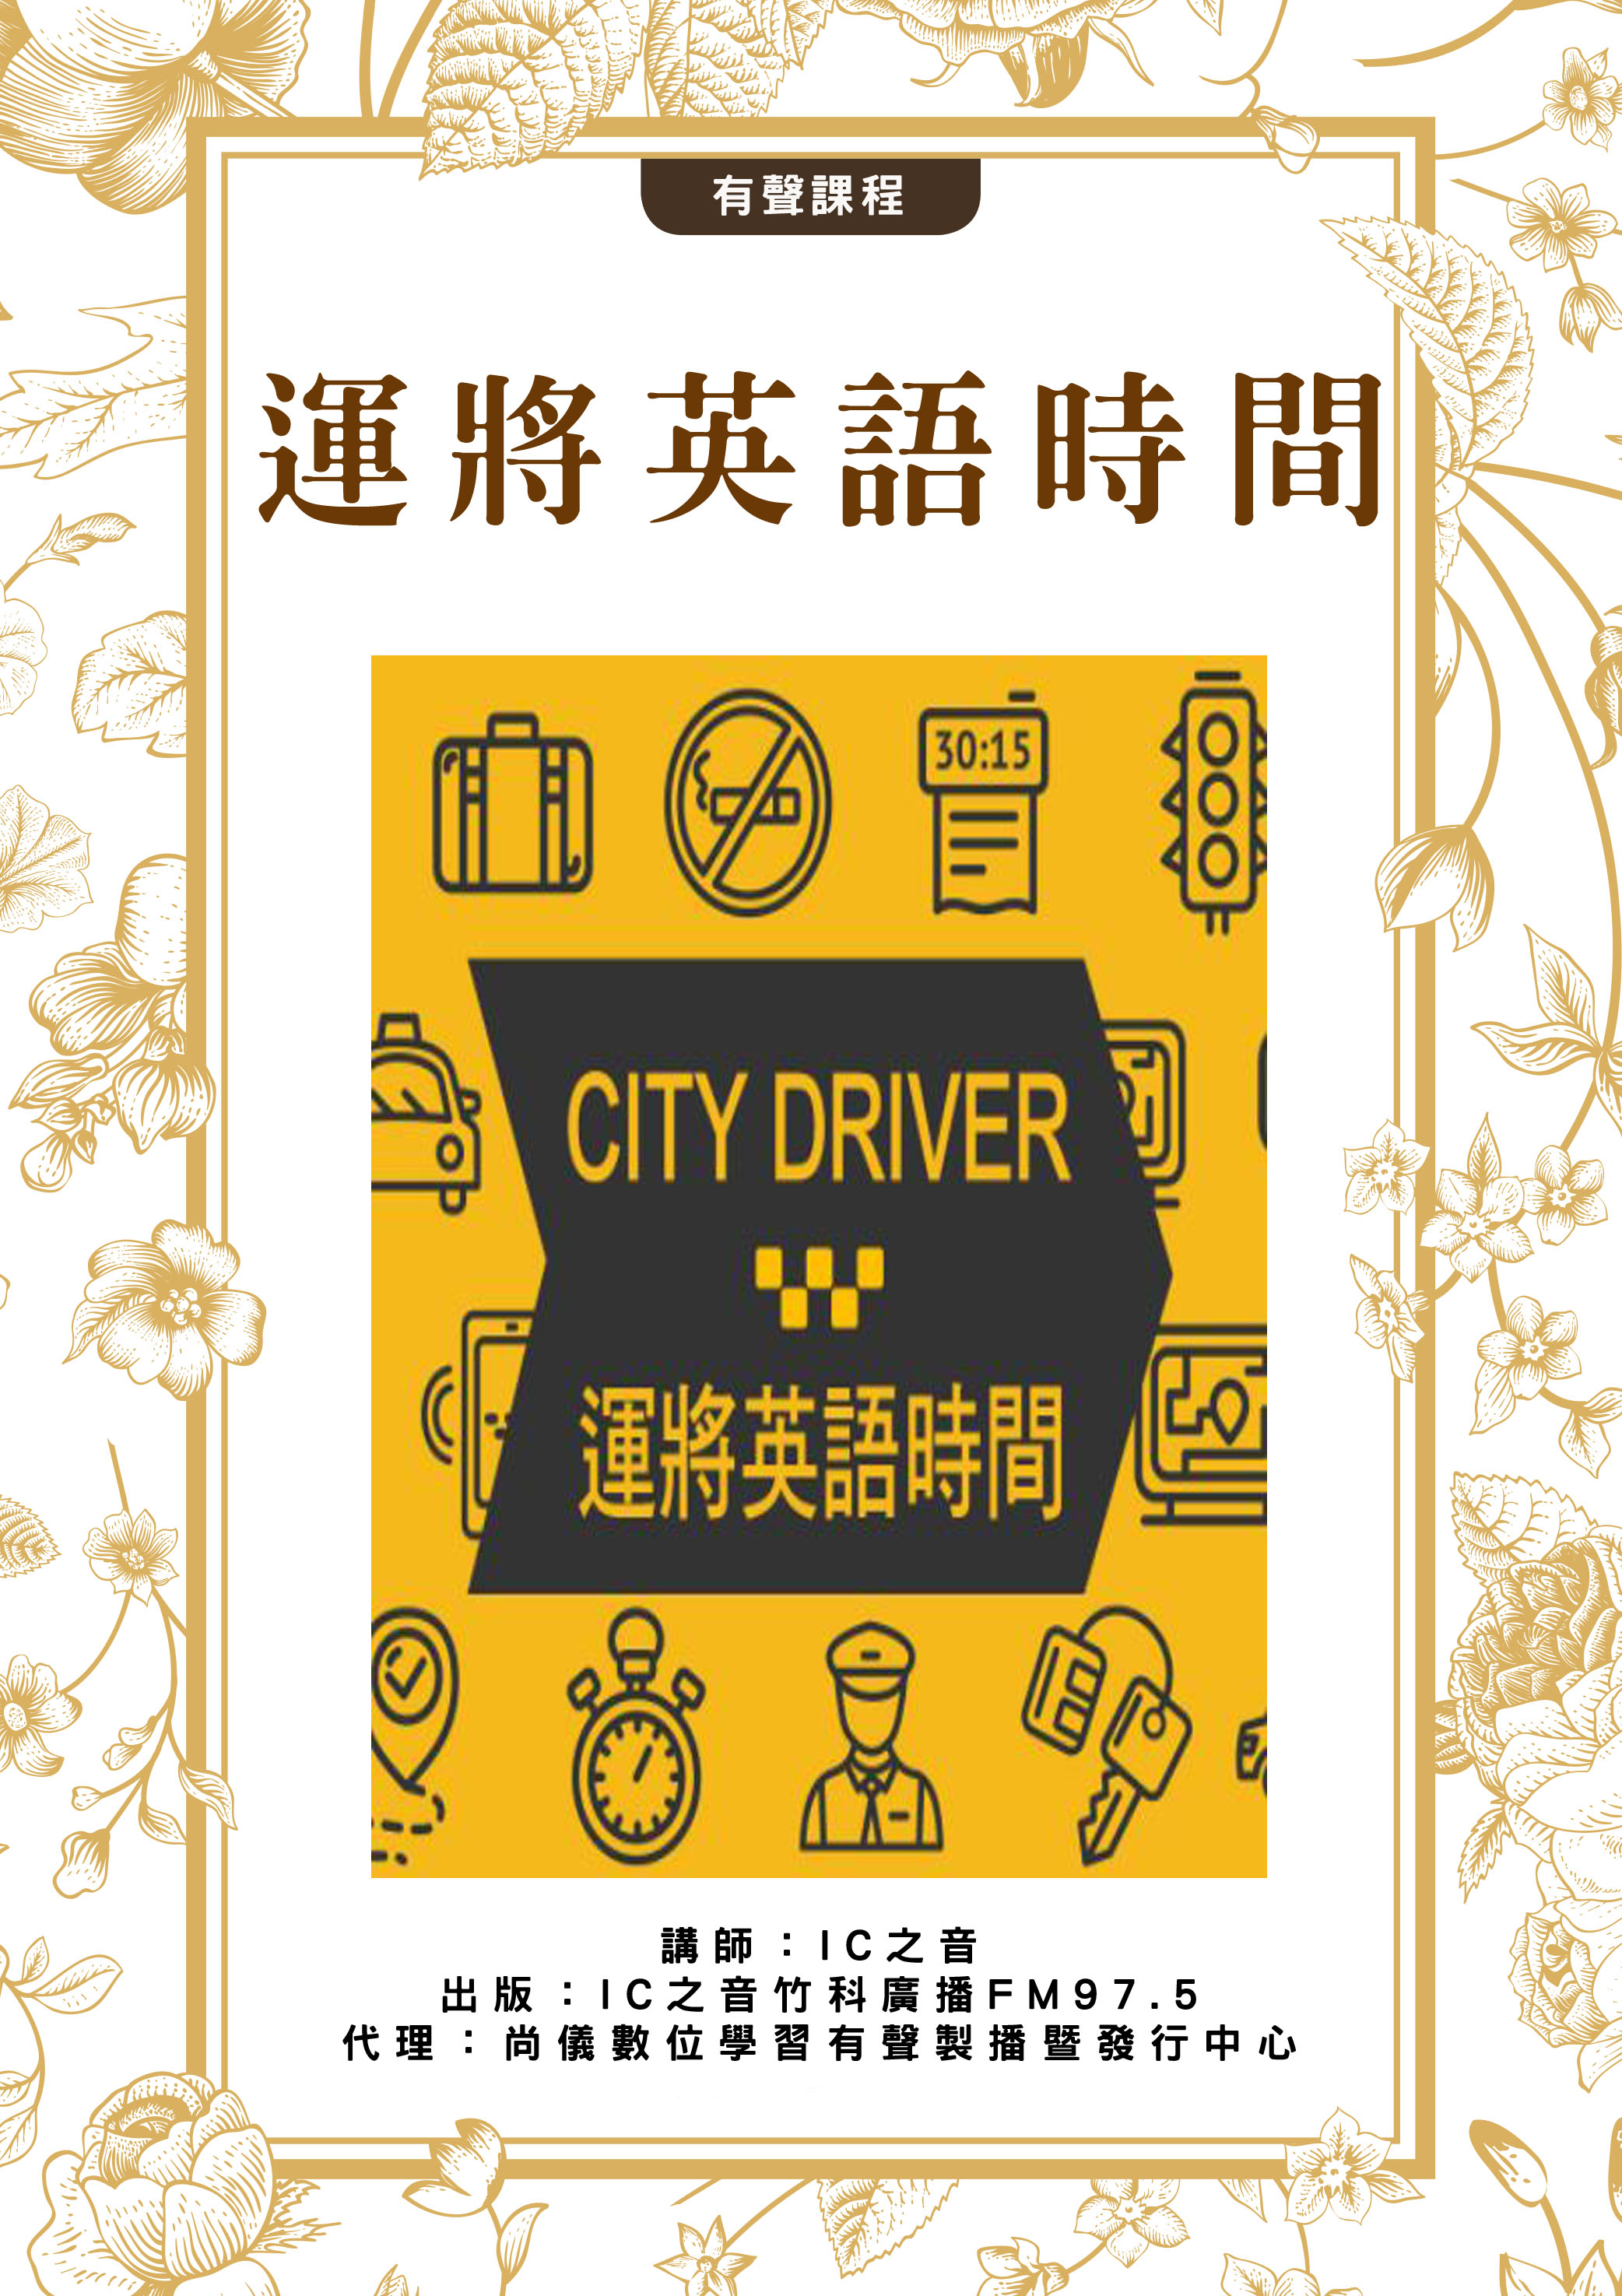 City Driver 運將英語時間封面圖